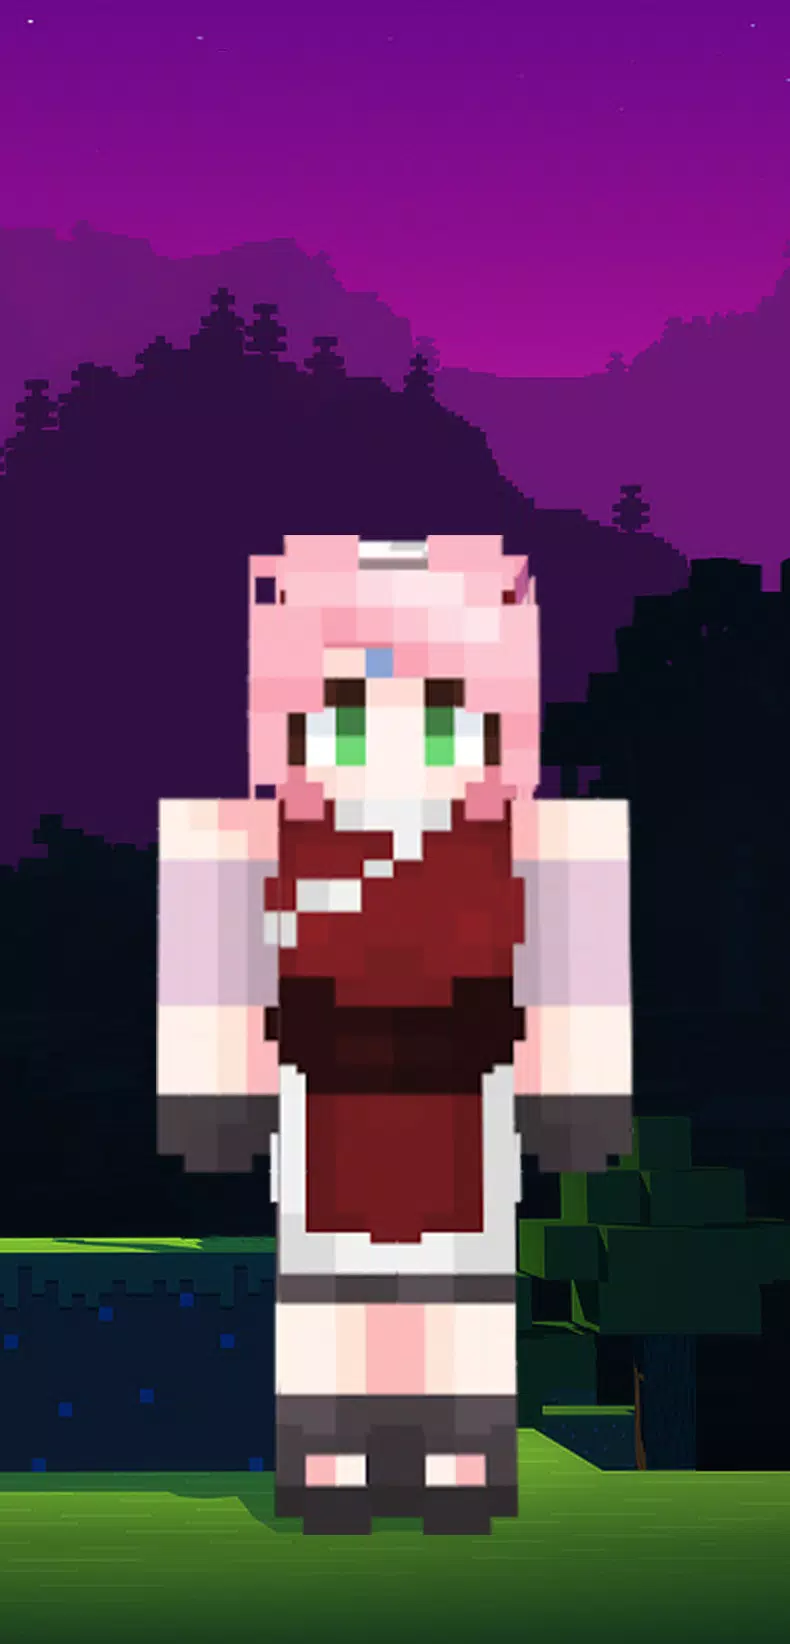 Sakura Skin for Minecraft - Apps on Google Play